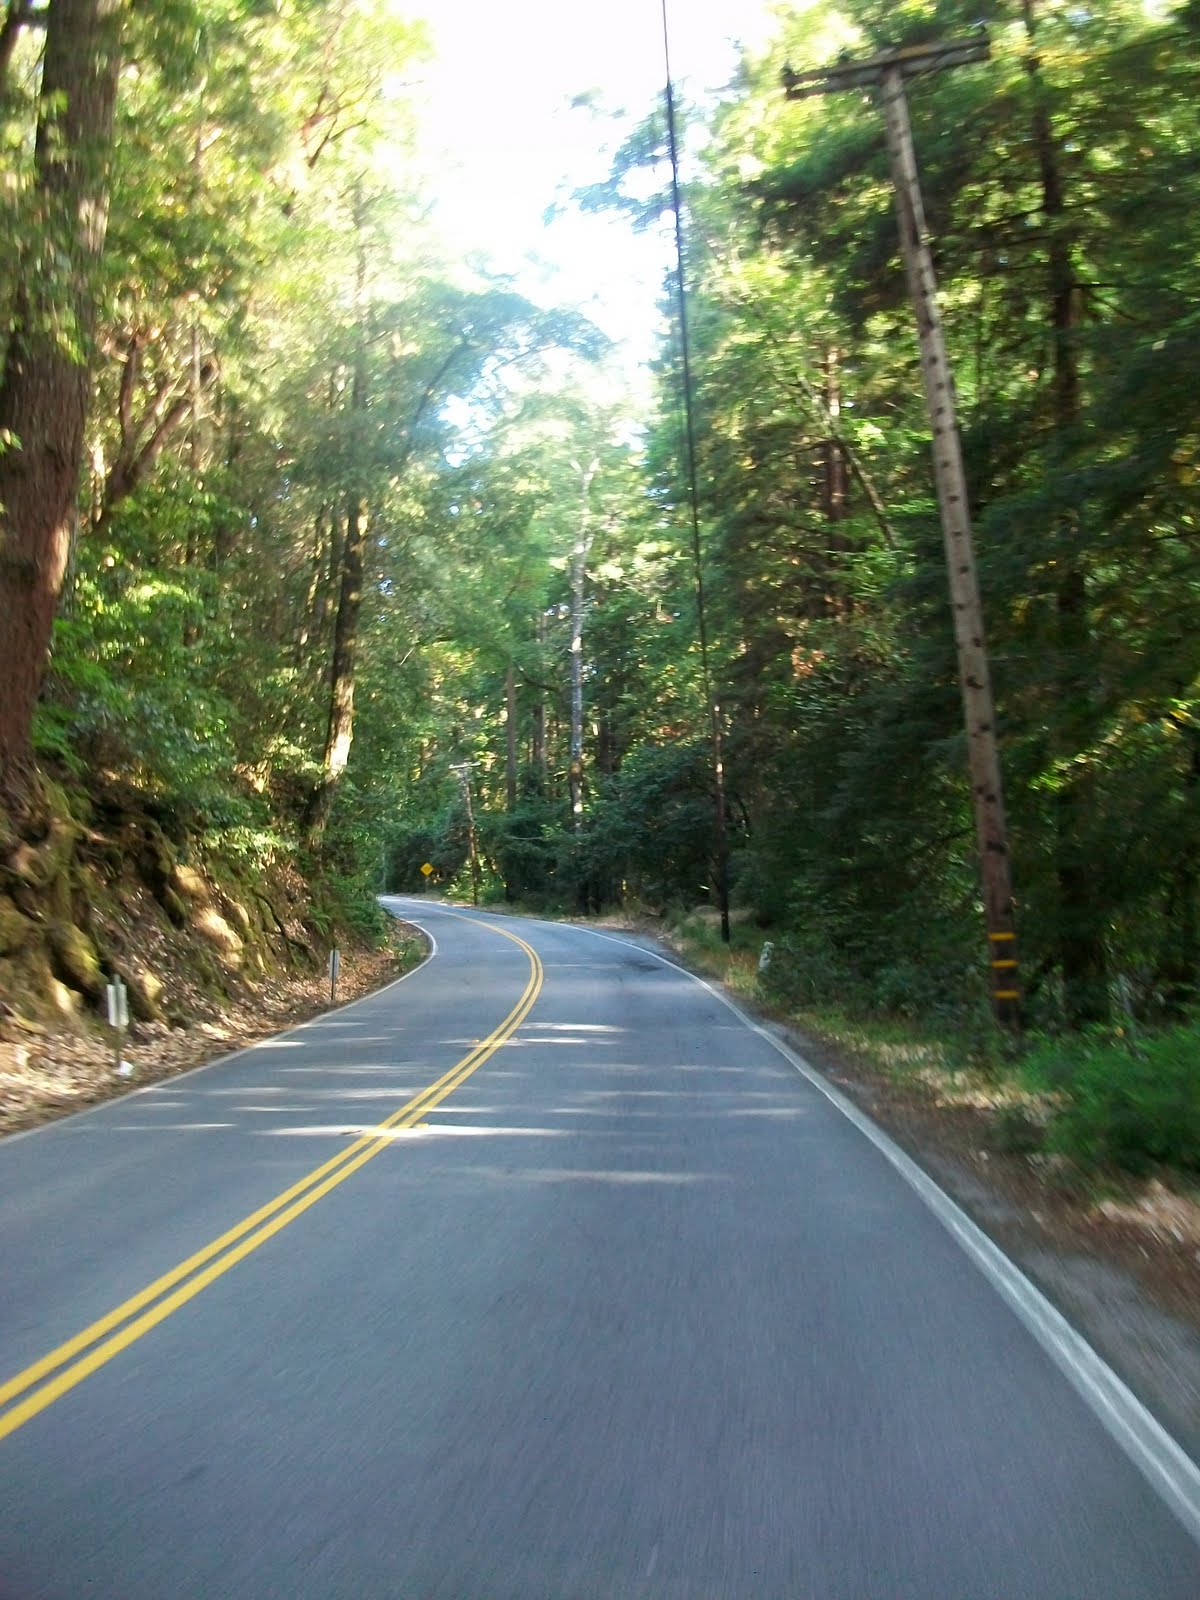 Cycling Through Santa Cruz Mountains Challenge Recapping the Passion